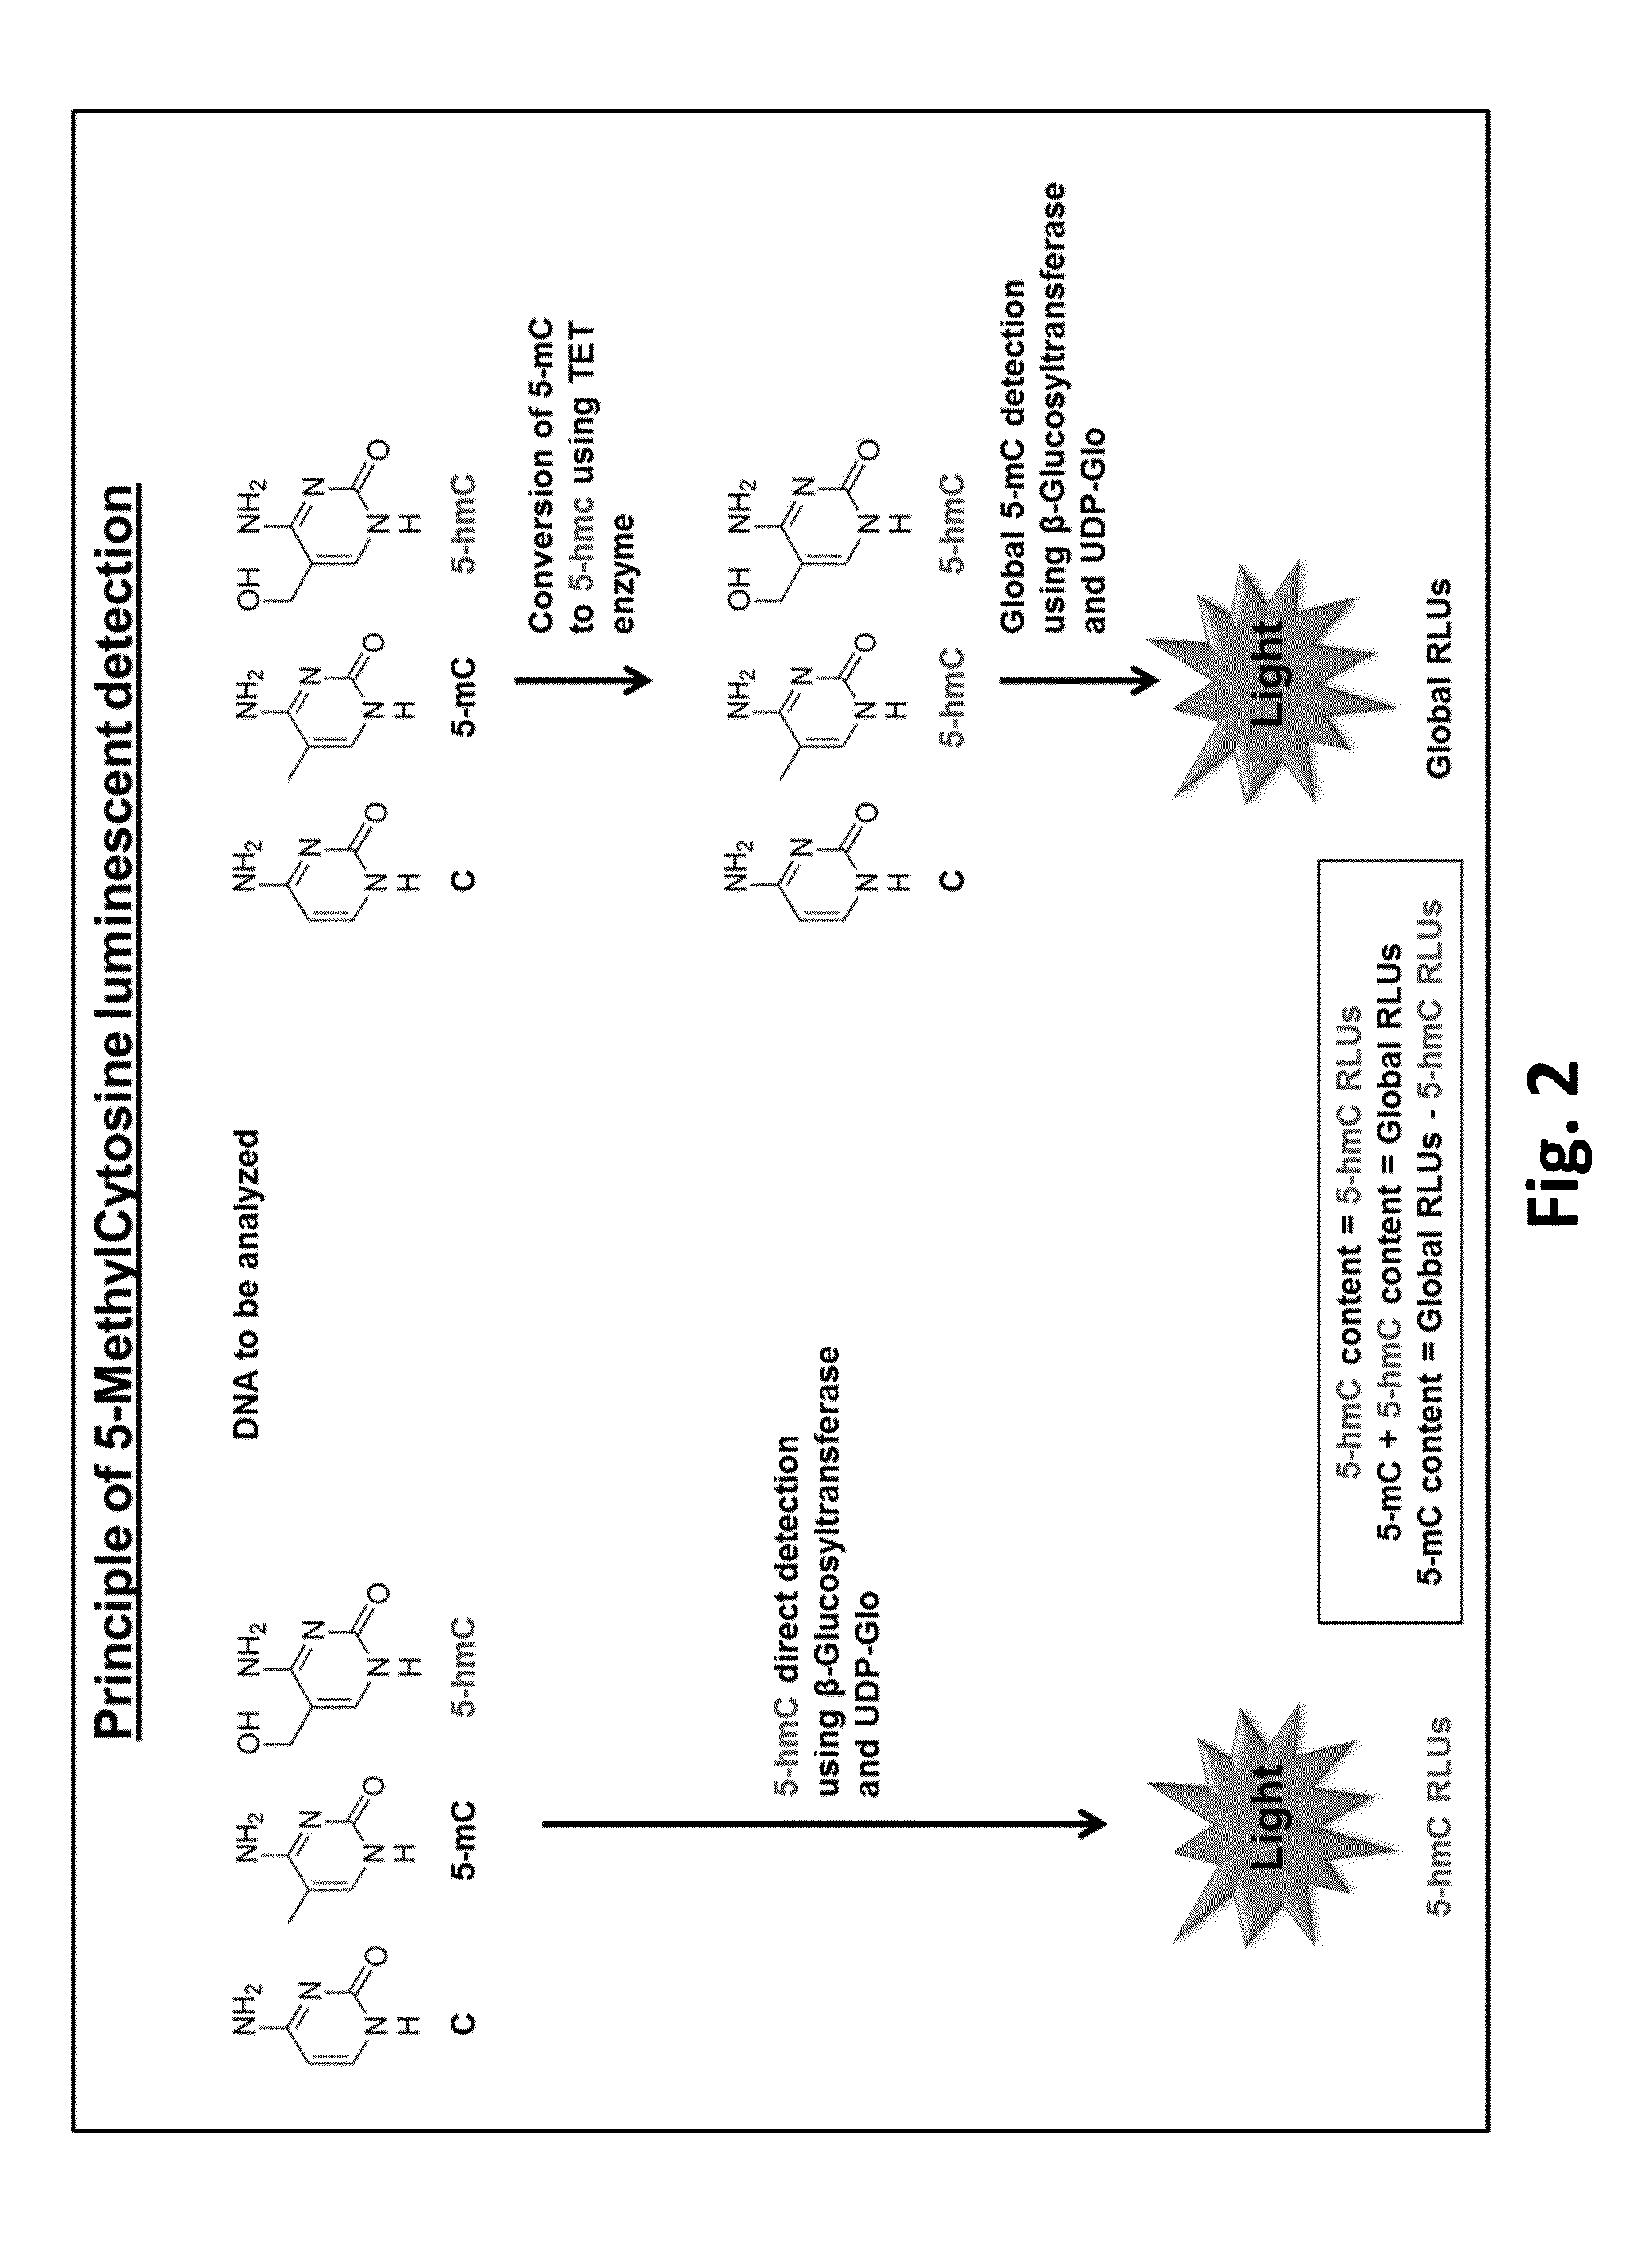 Method for quantifying 5-hydroxymethylcytosine